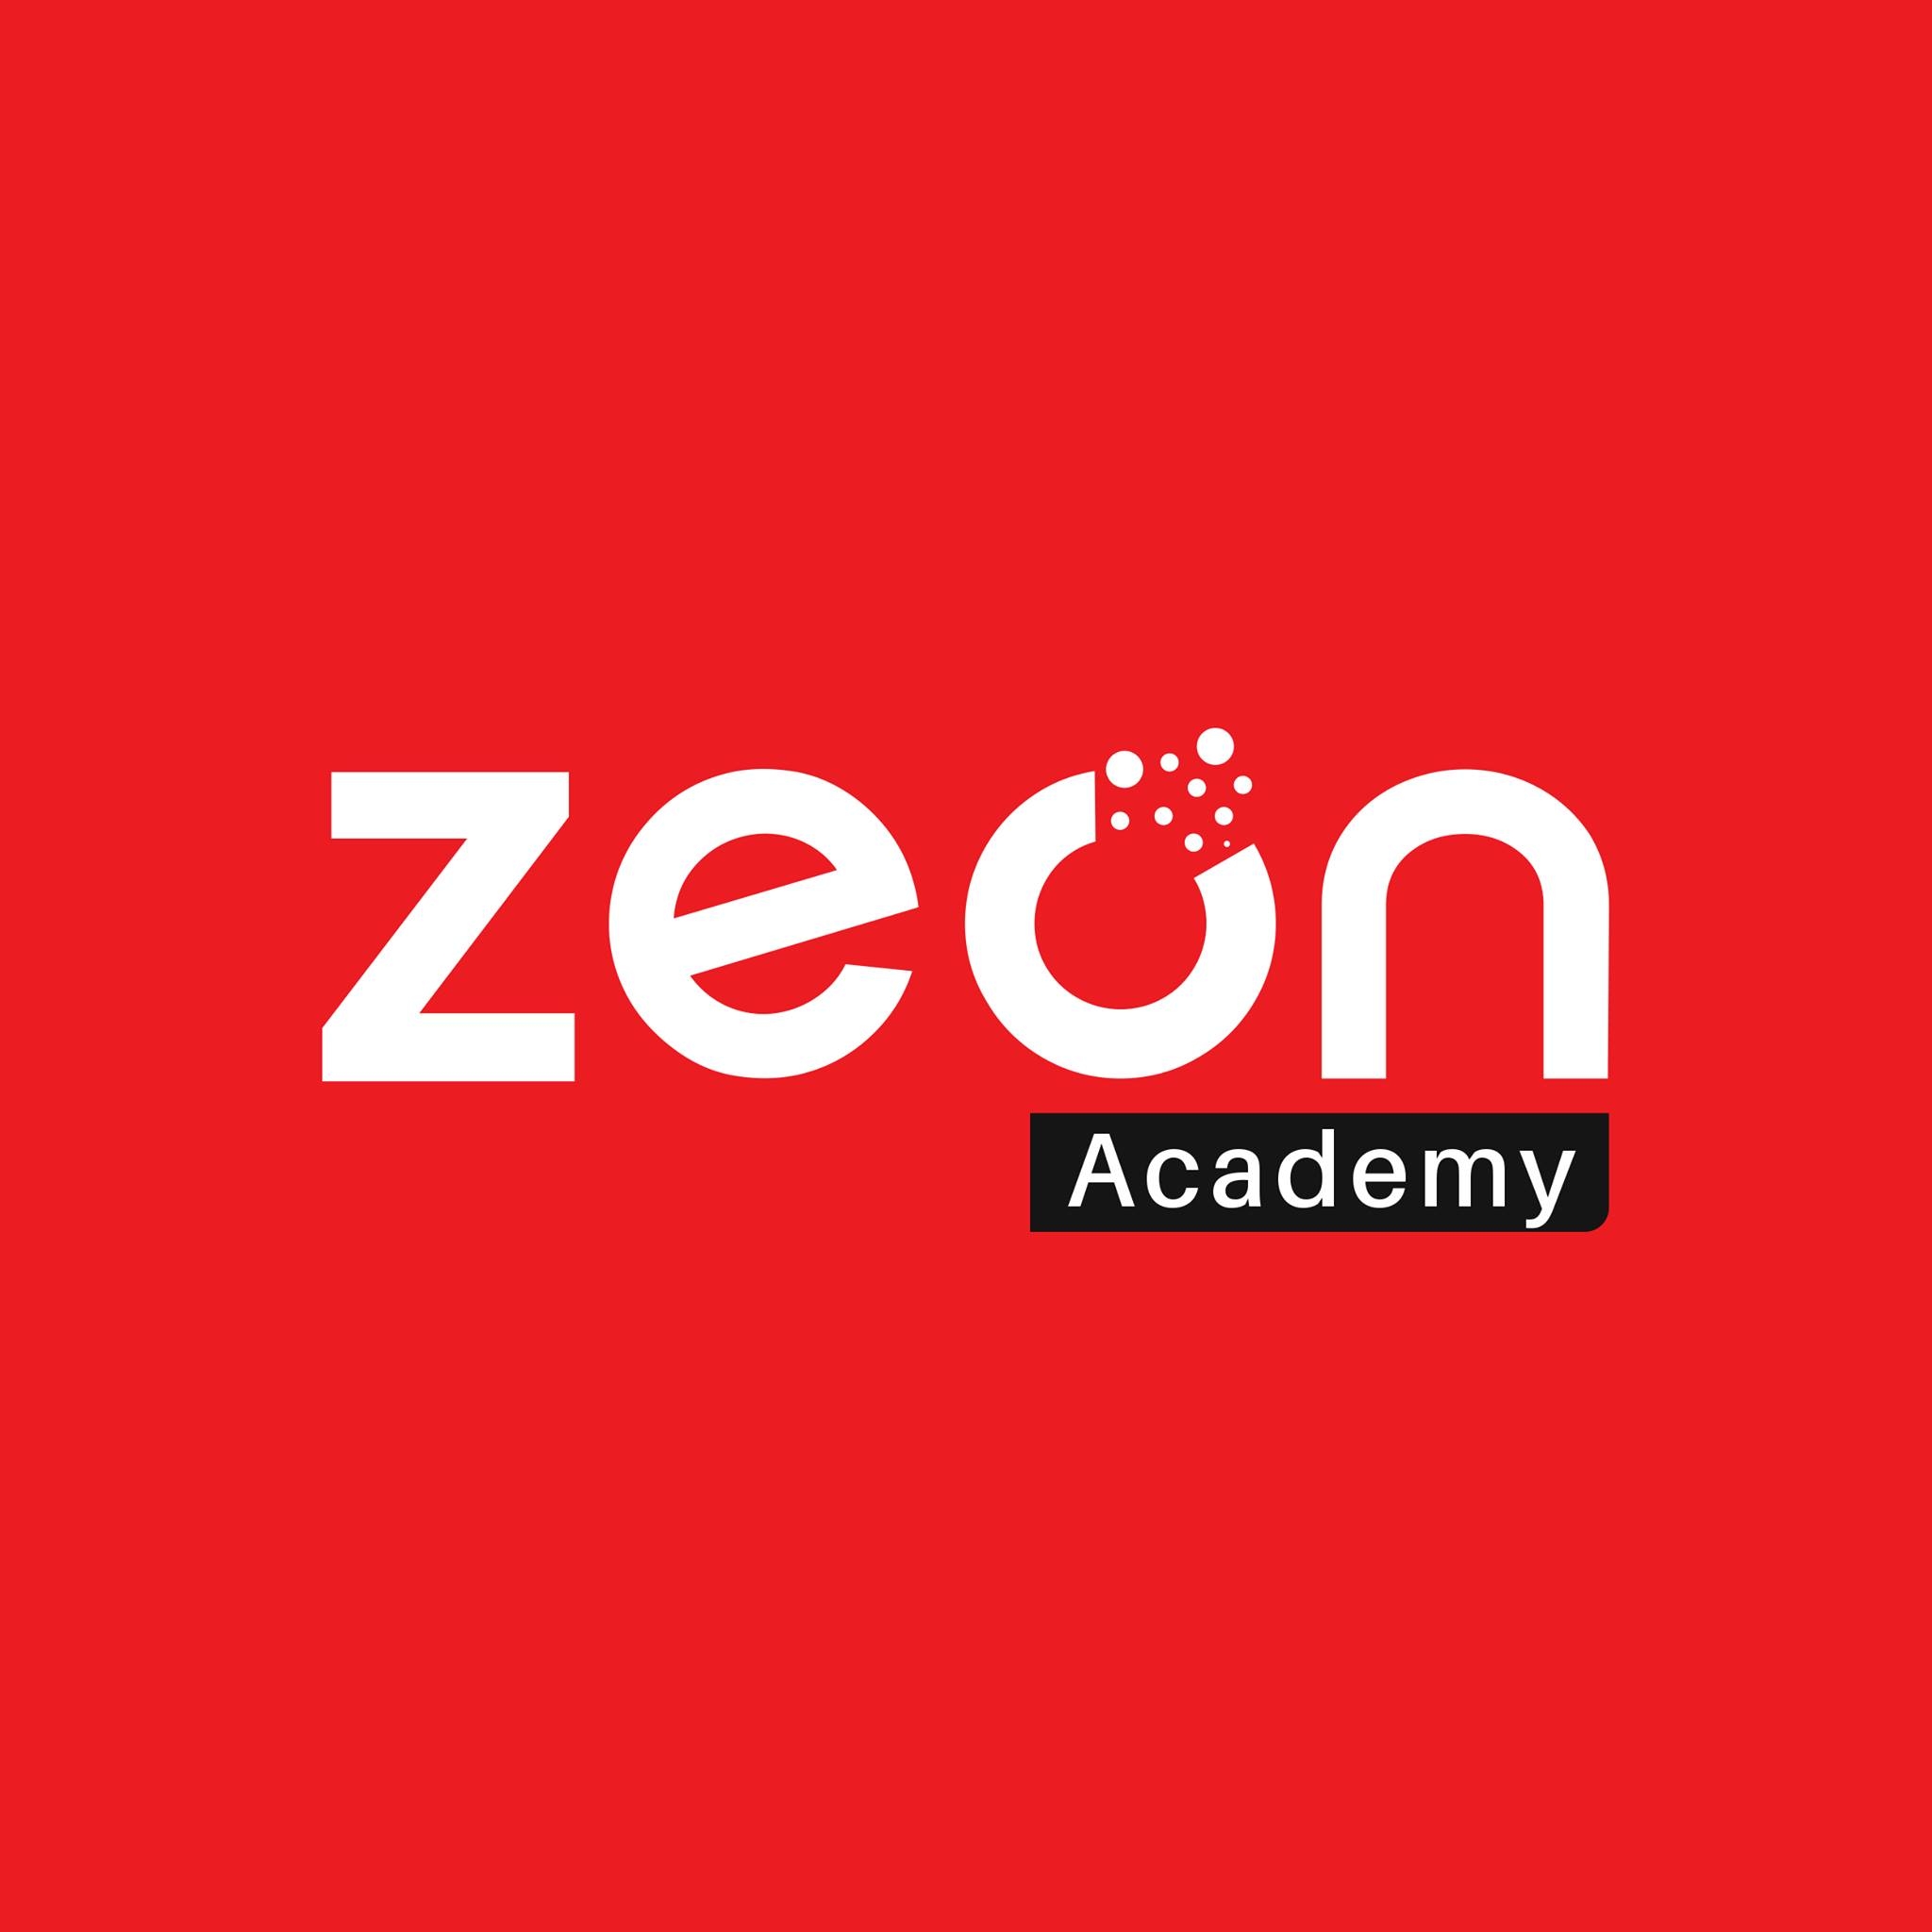  Digital marketing institute in Kochi | Zeon Academy